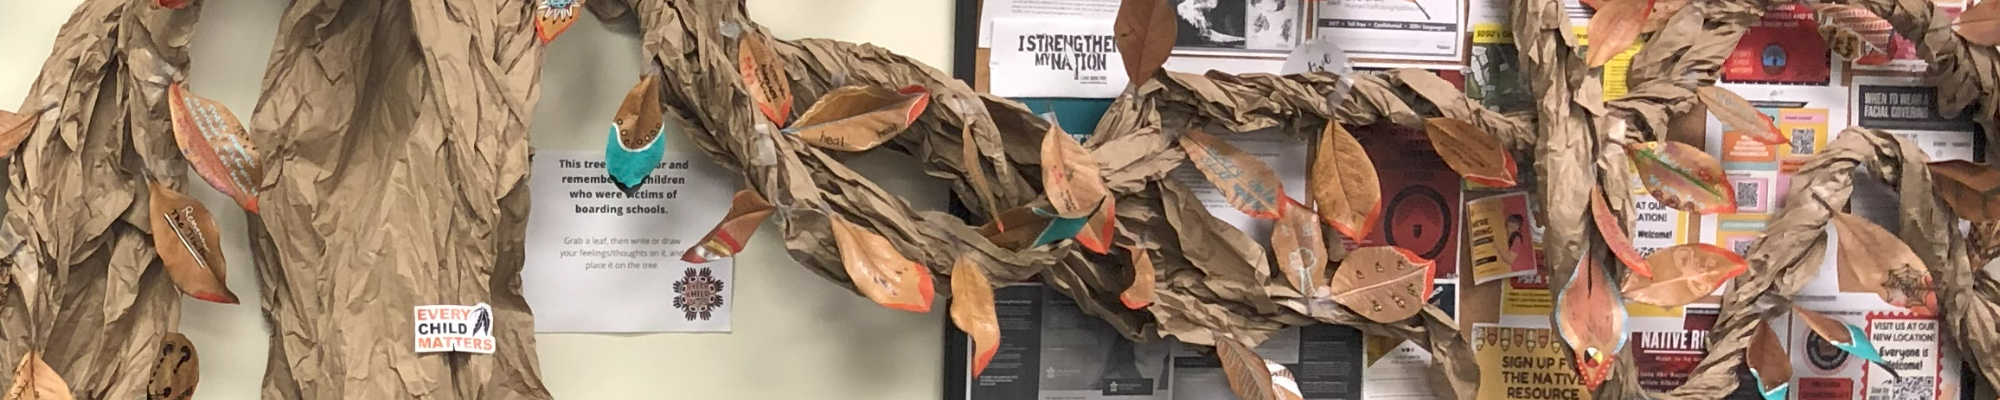 Art in the Native Resource Center - paper magnolia tree